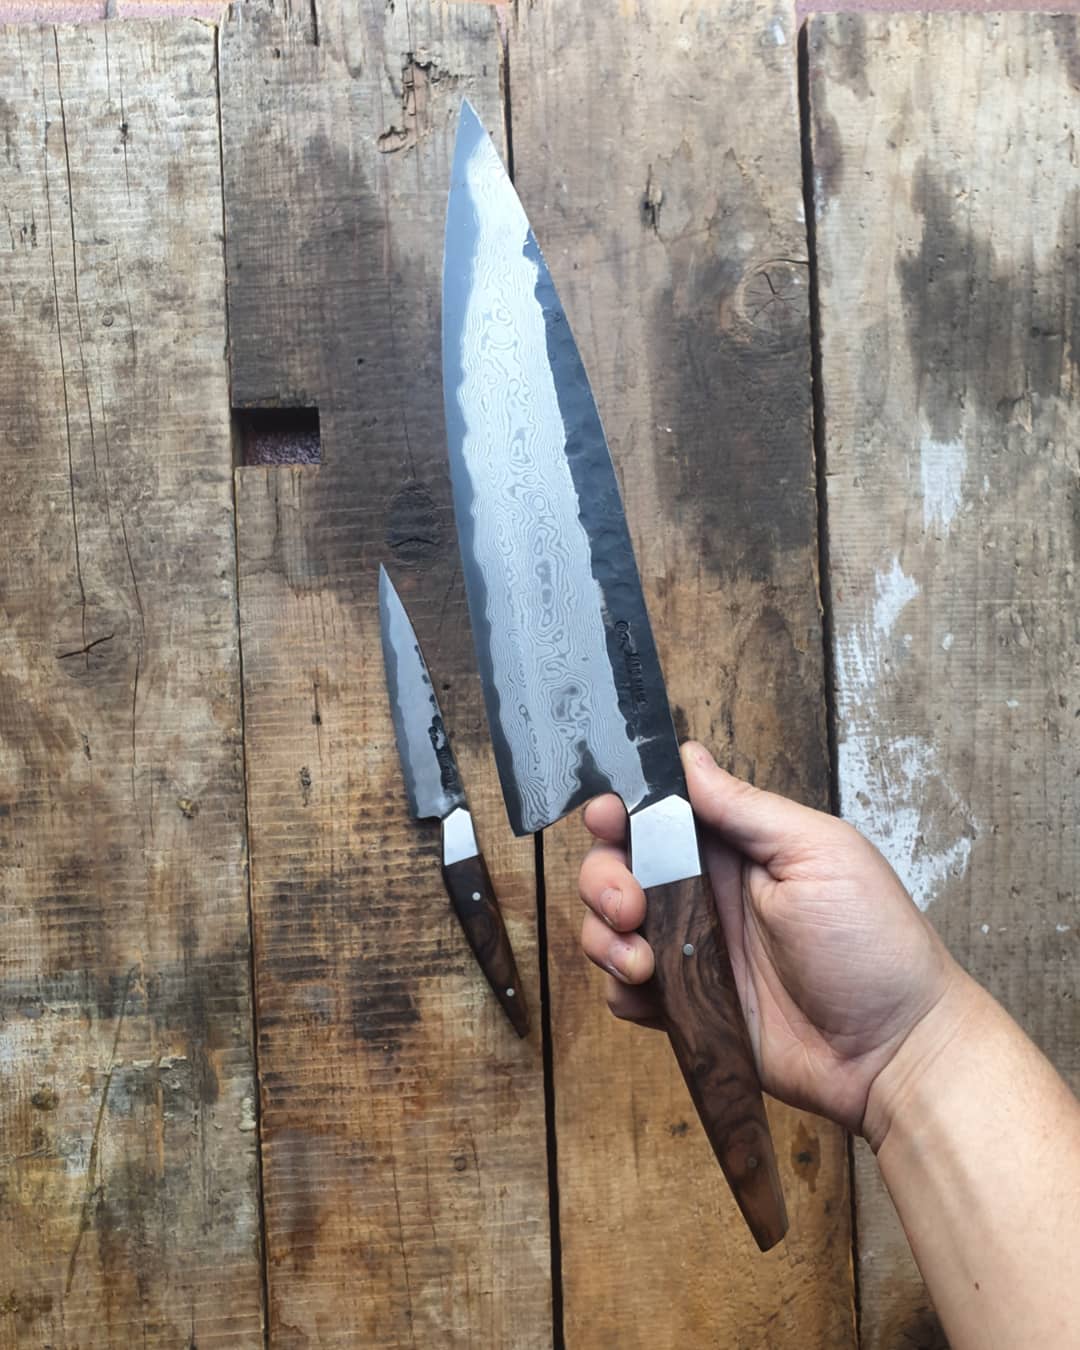 Chef knife & Utility